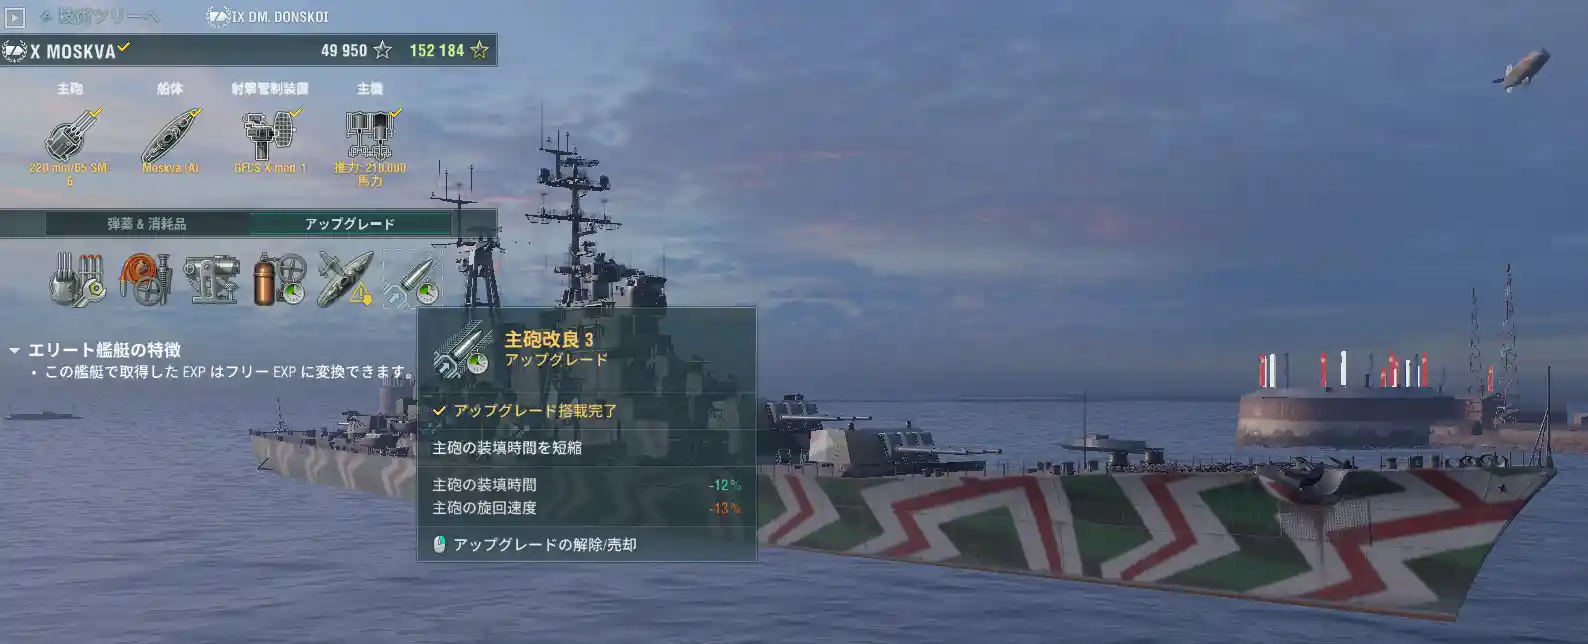 World of Warships 20.03.07 モスクワアップグレード内容.jpg